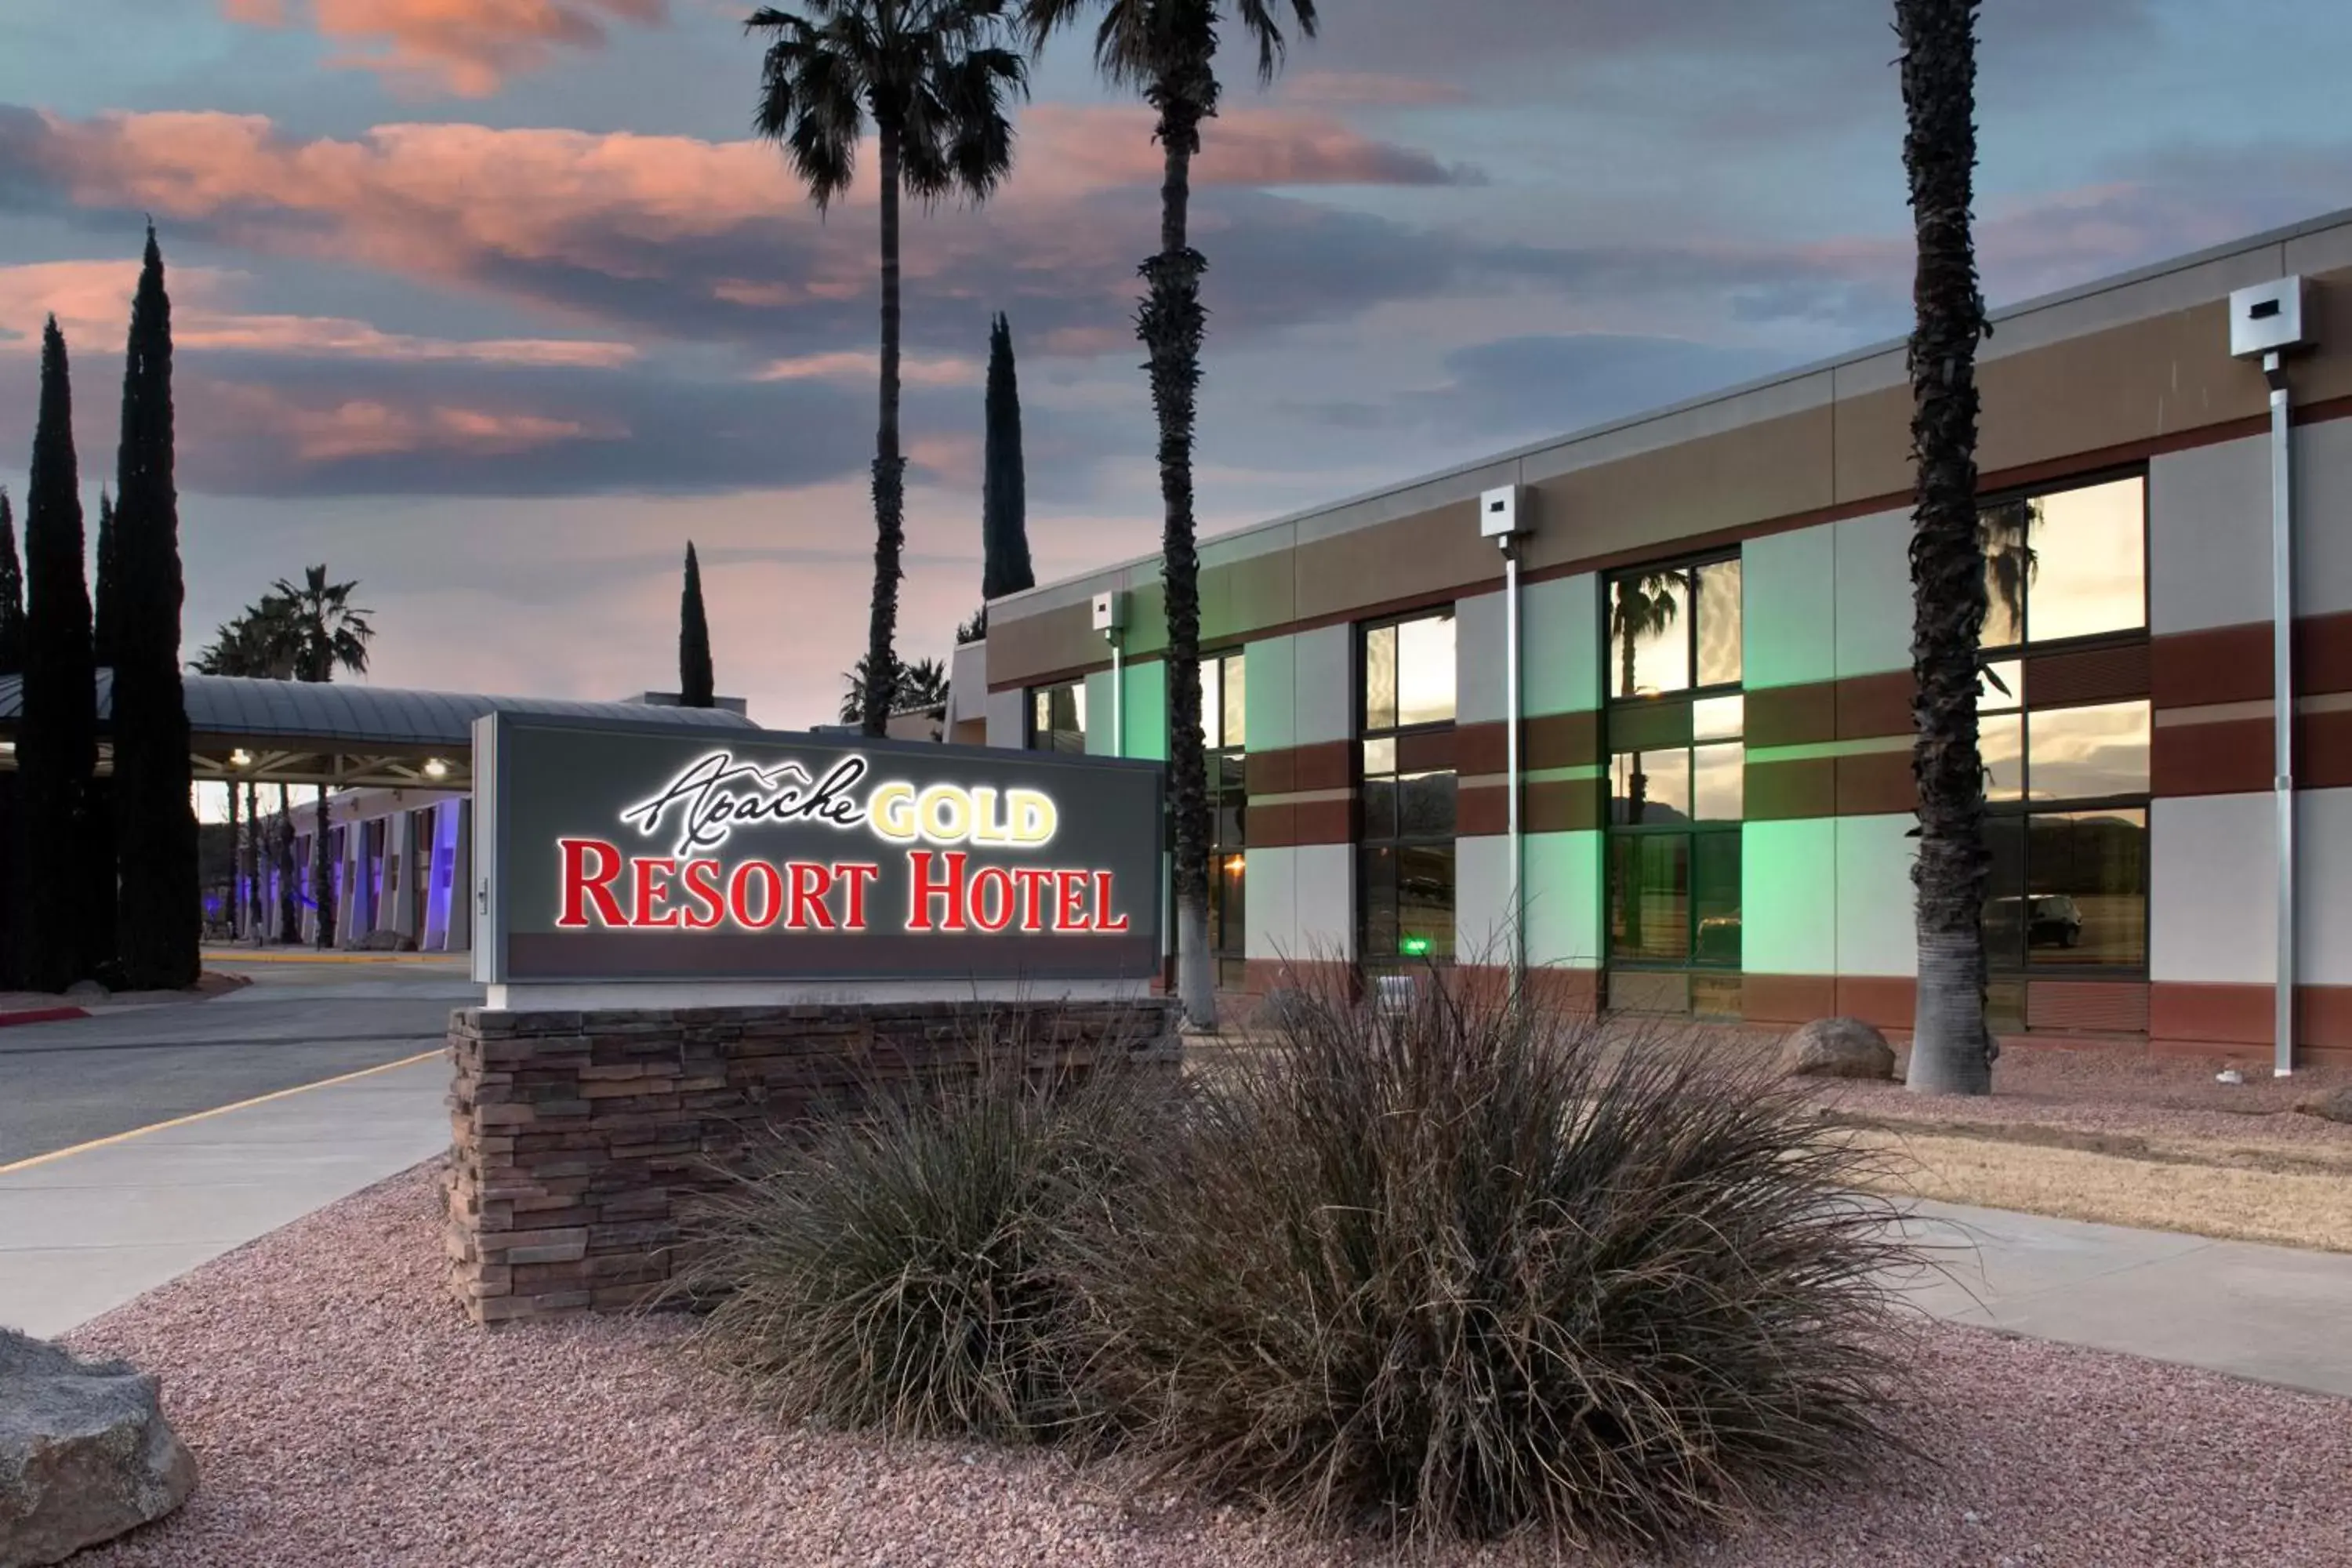 Property Building in Apache Gold Resort Hotel & Casino